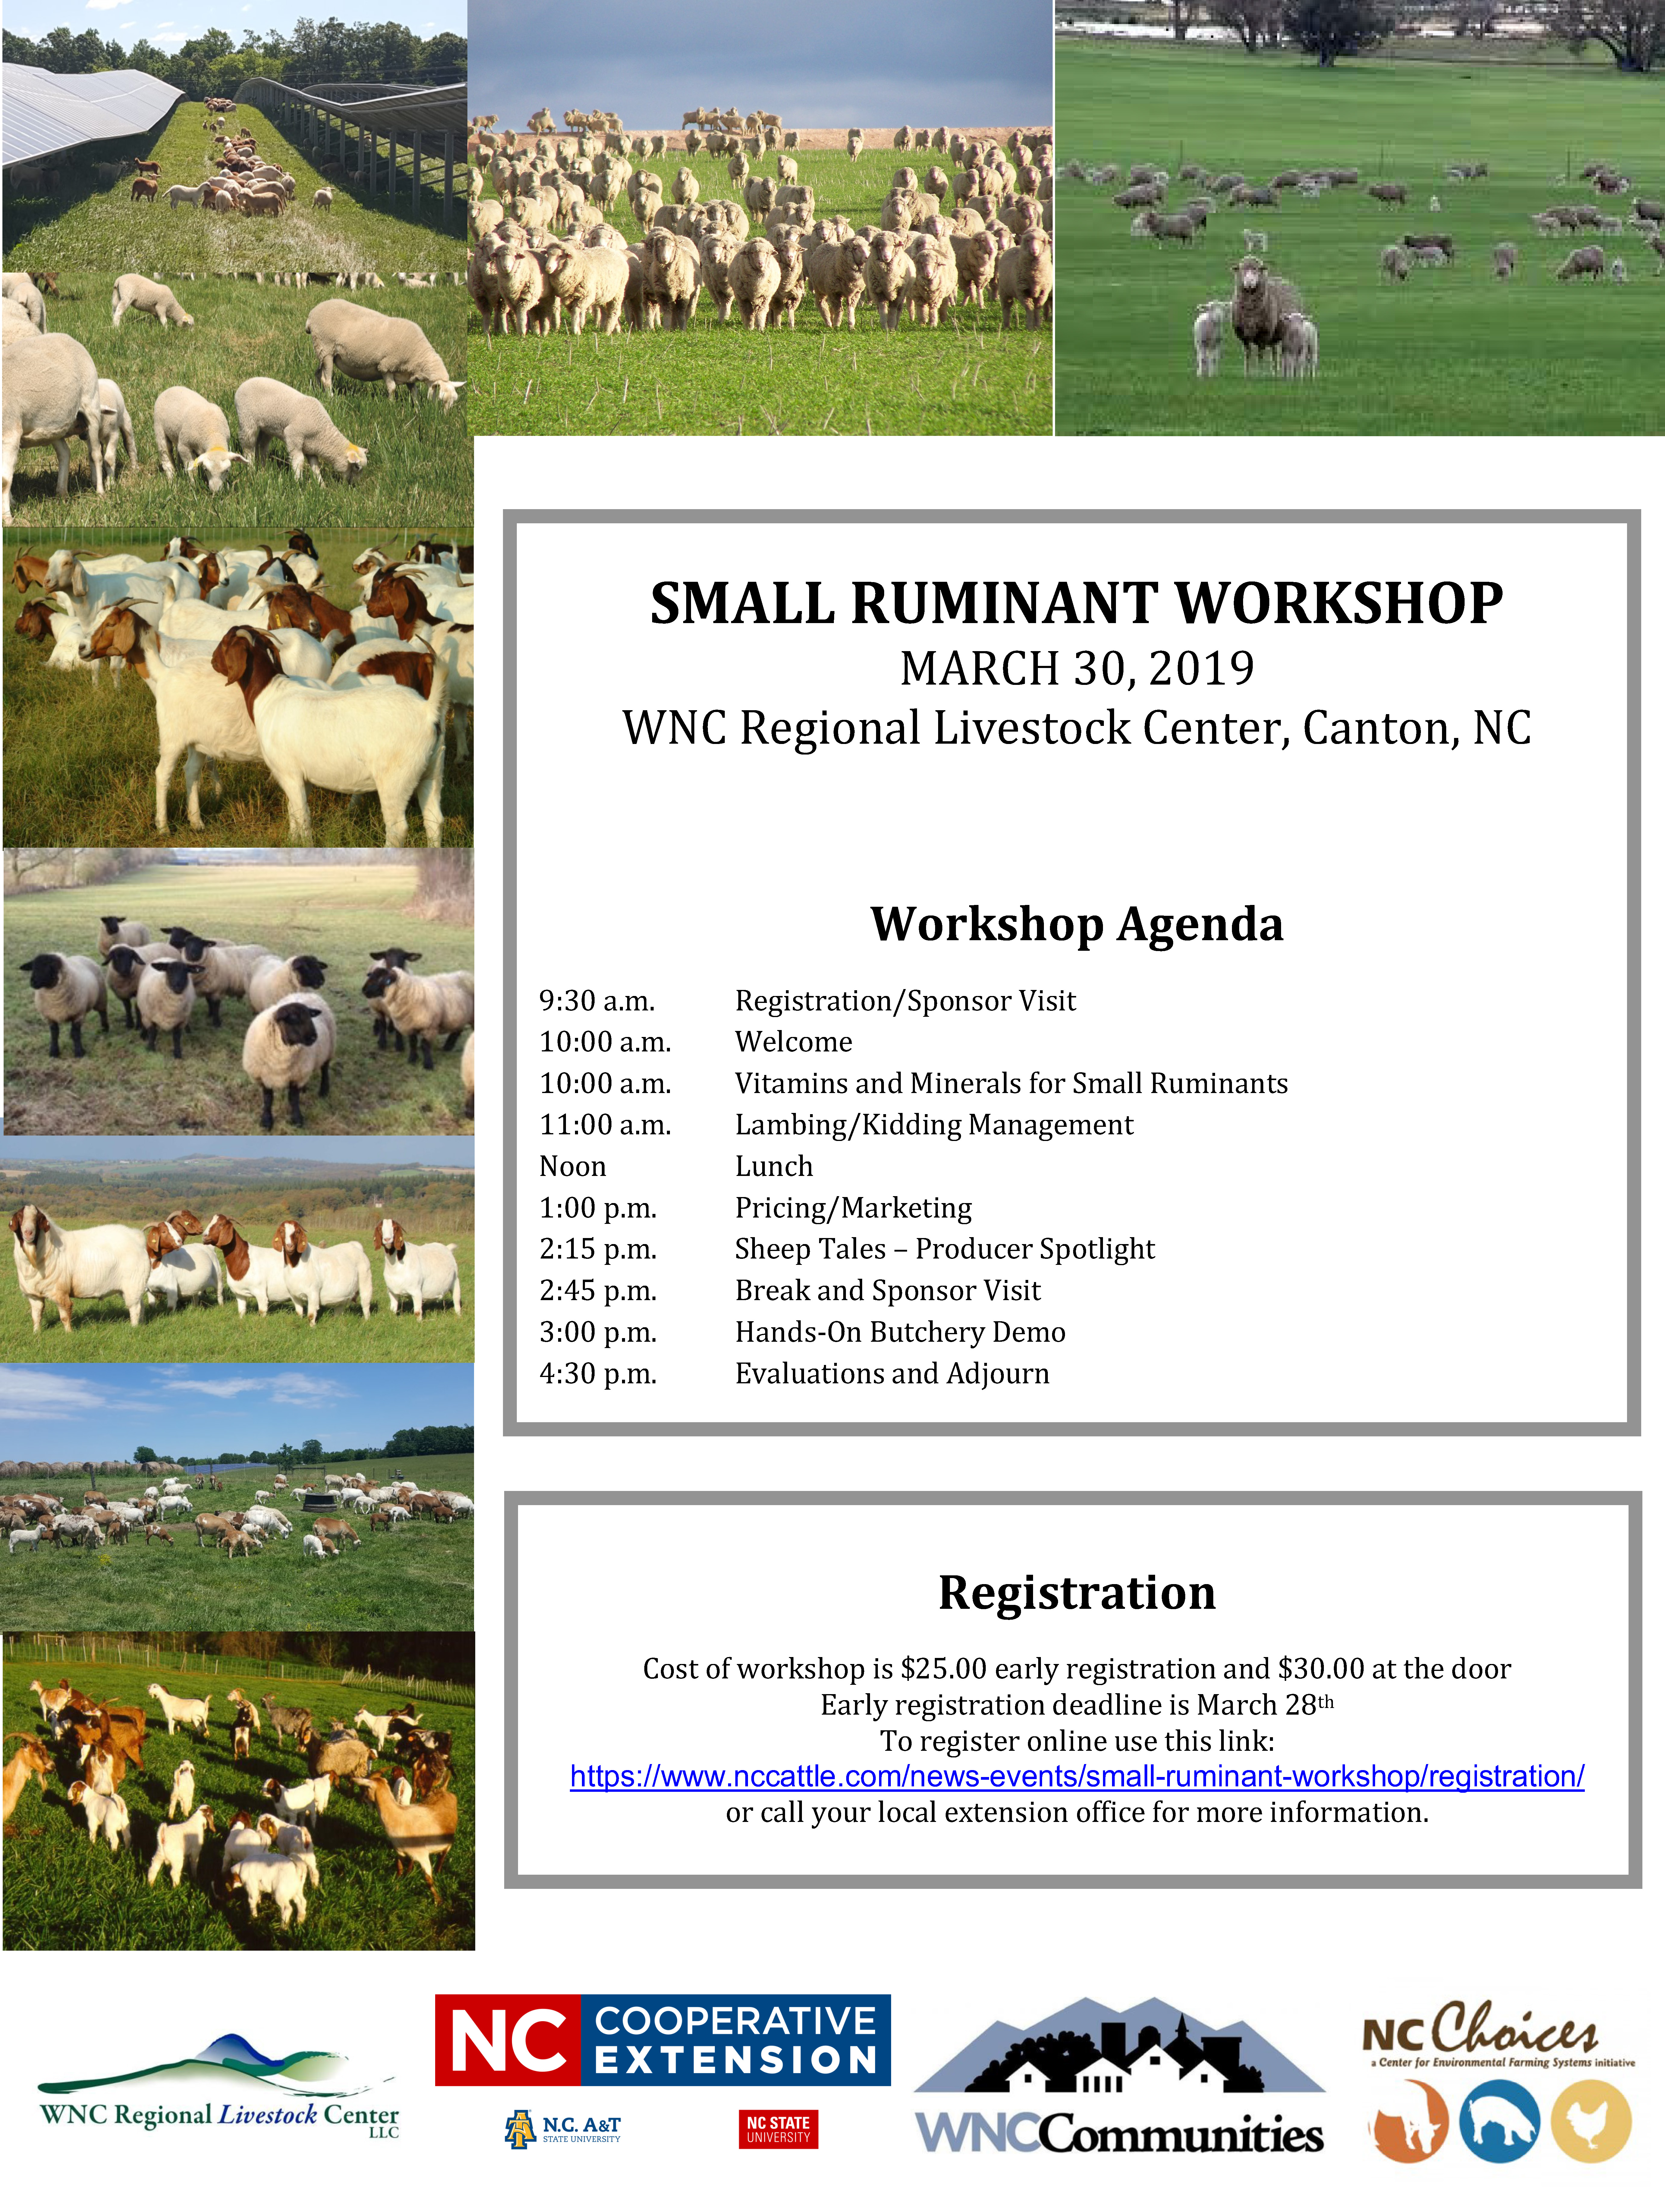 Small ruminant workshop flyer